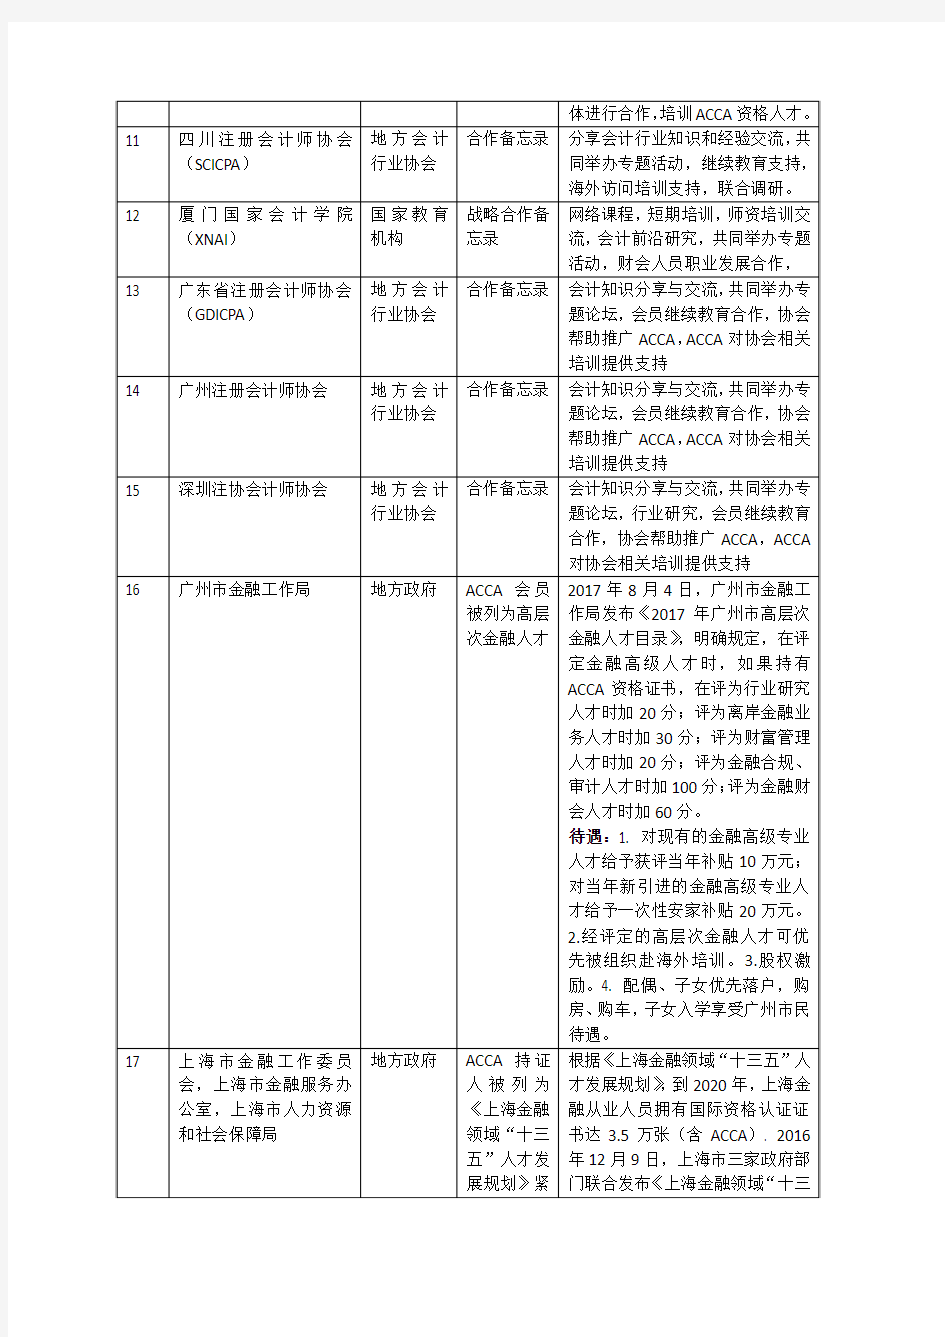 ACCA在中国官方及半官方机构被认可的情况一览